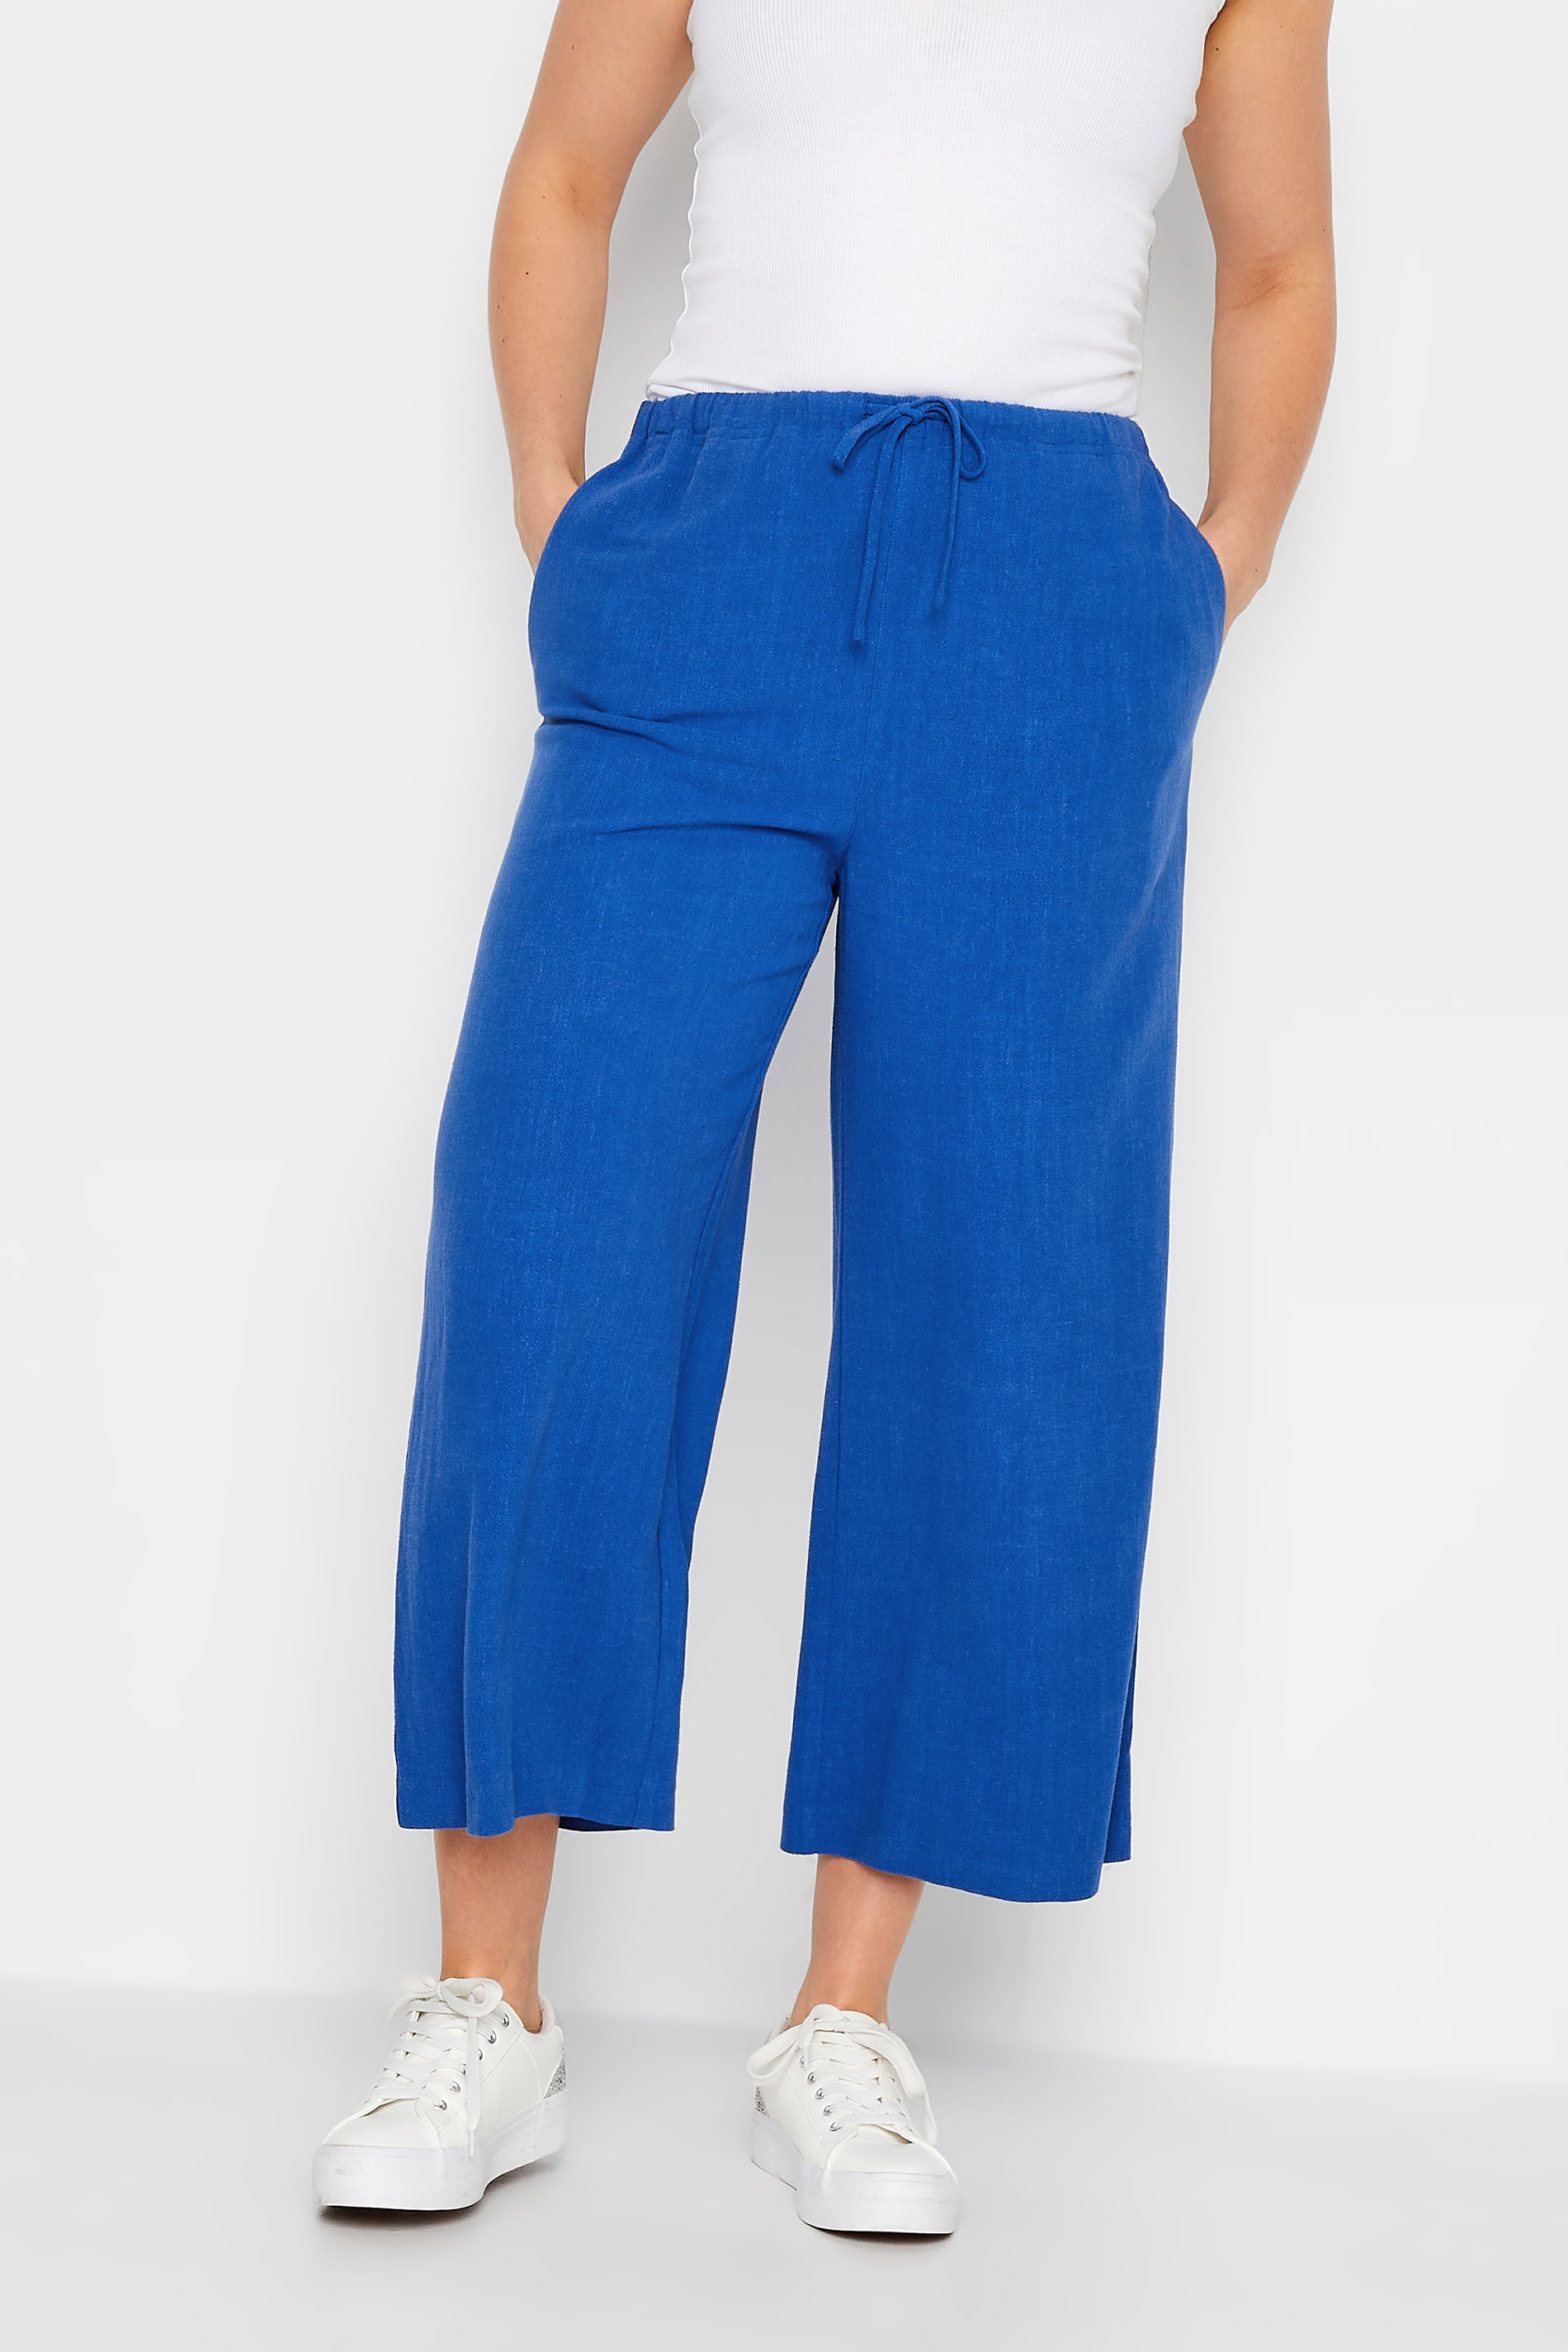 Ladies Pull-On Linen Capri Pants - Cobalt